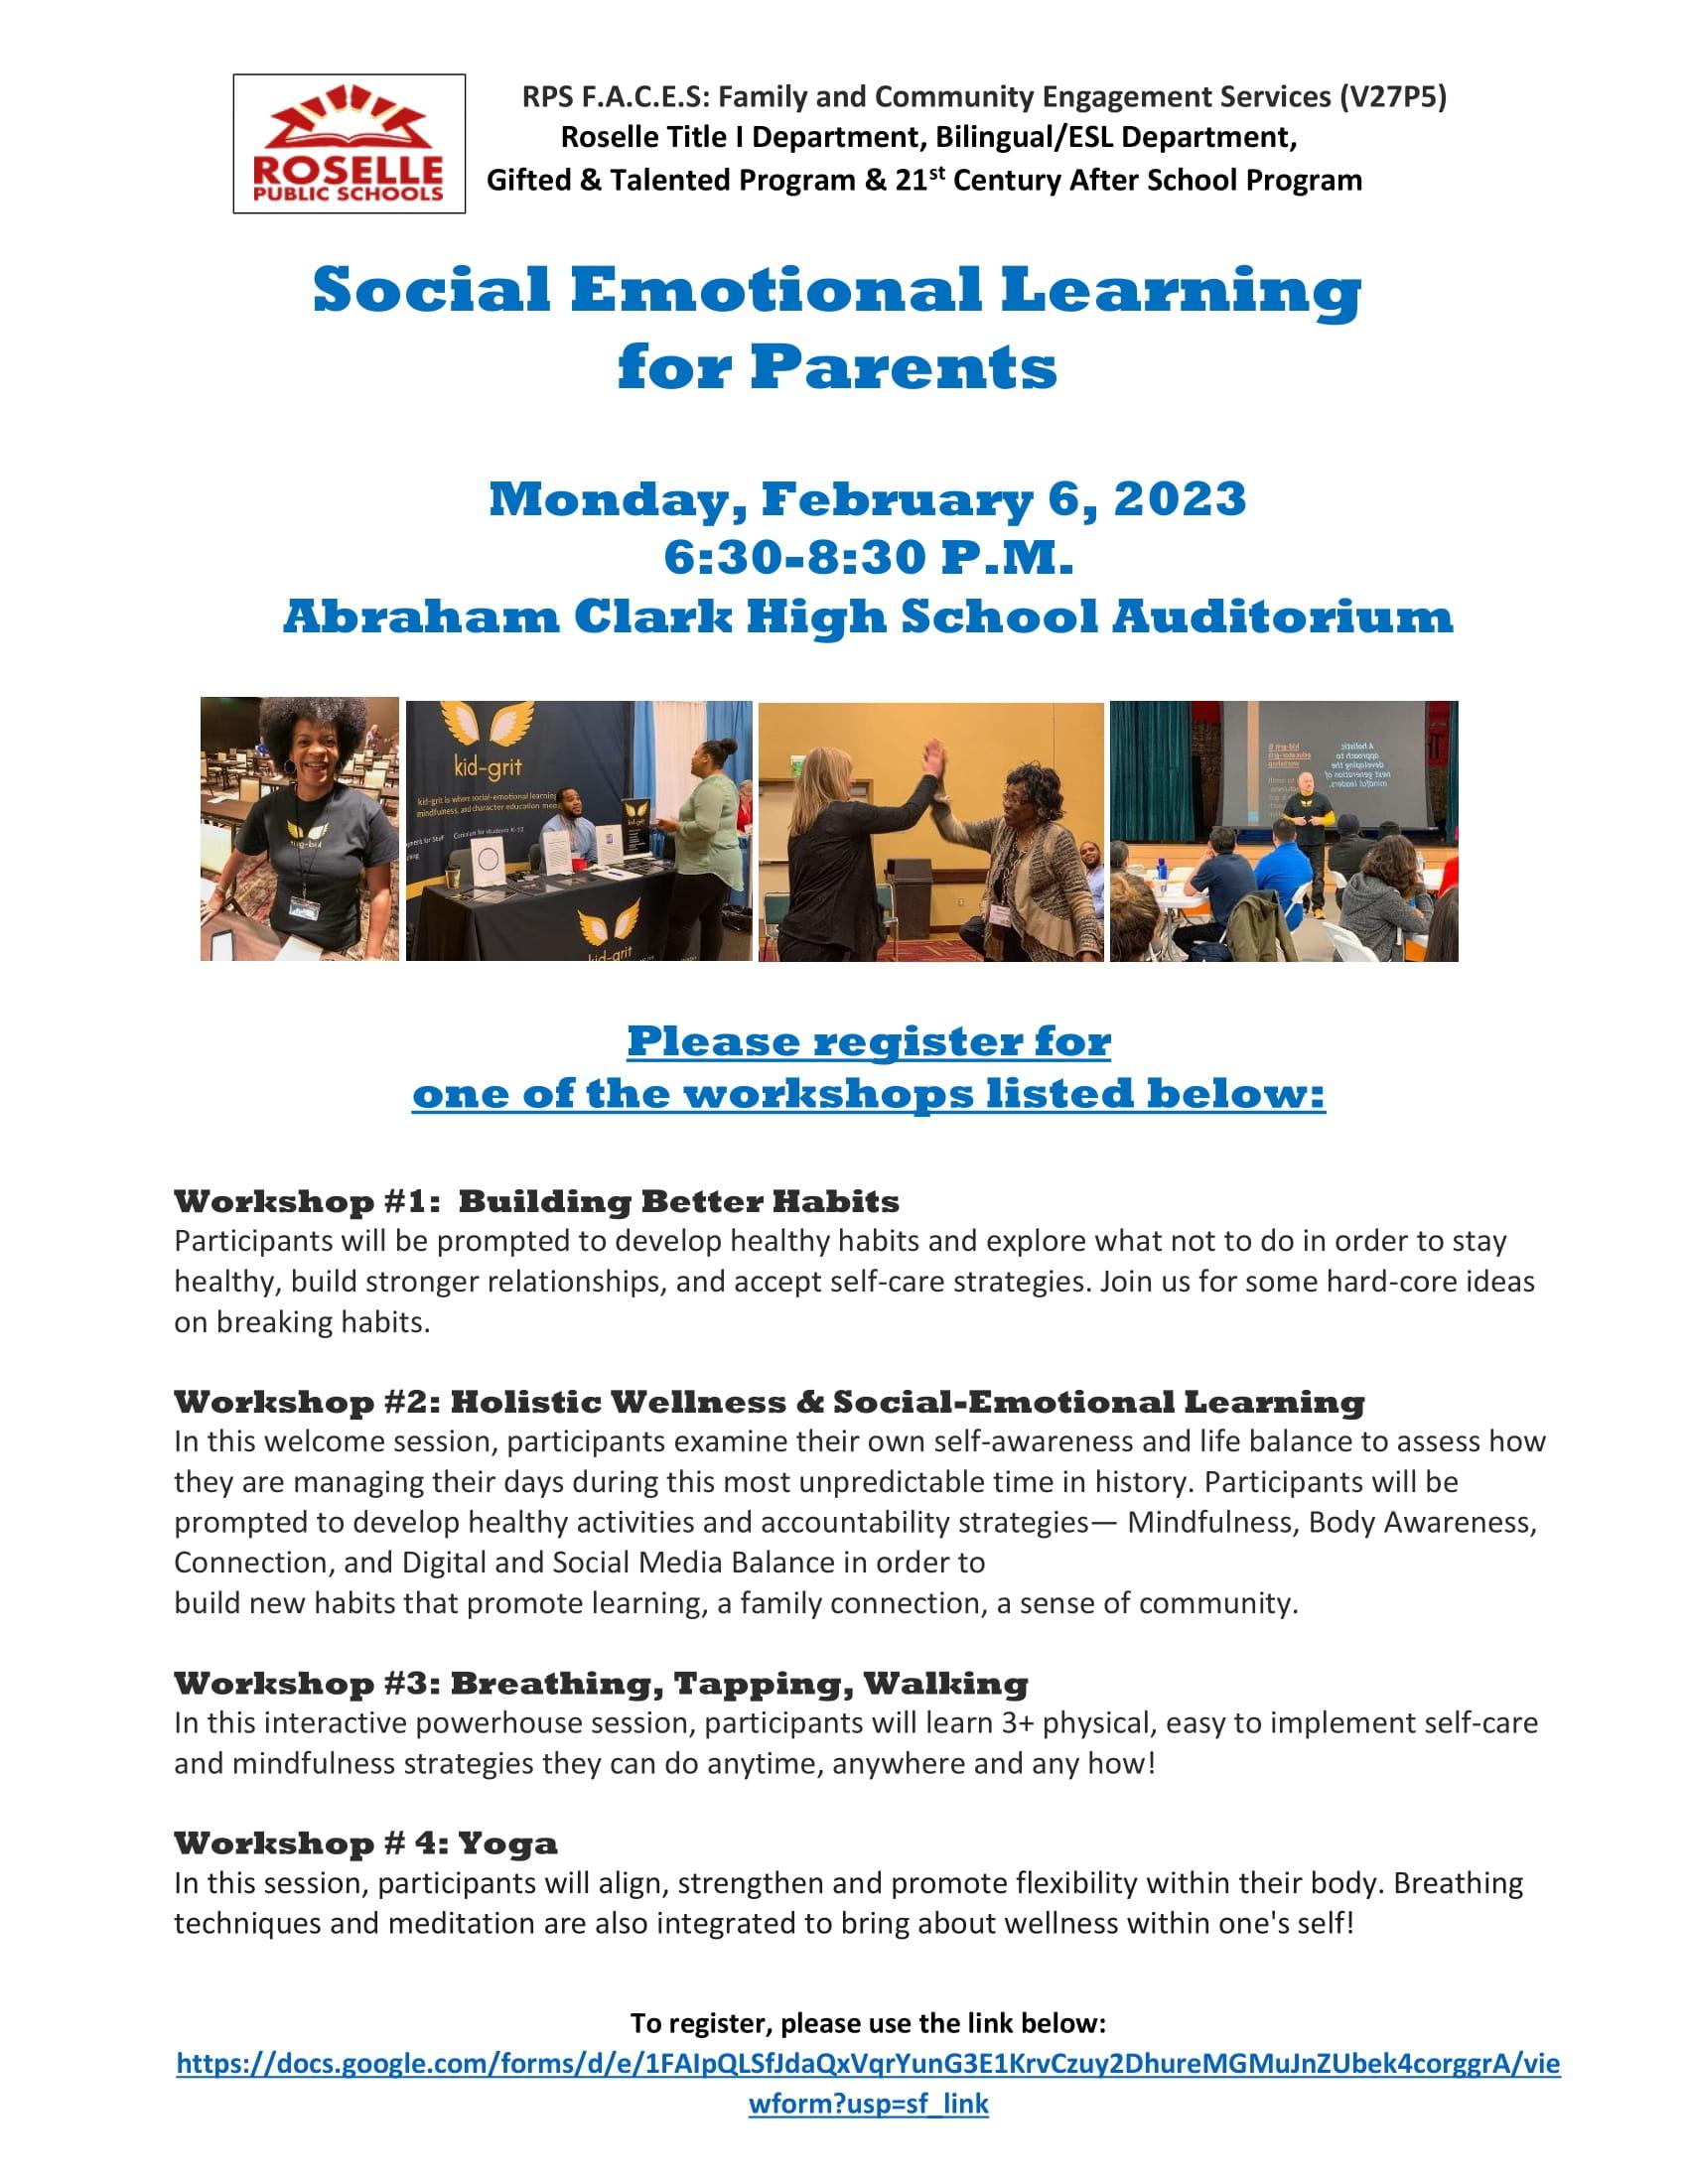 Social Emotional Learning for Parents